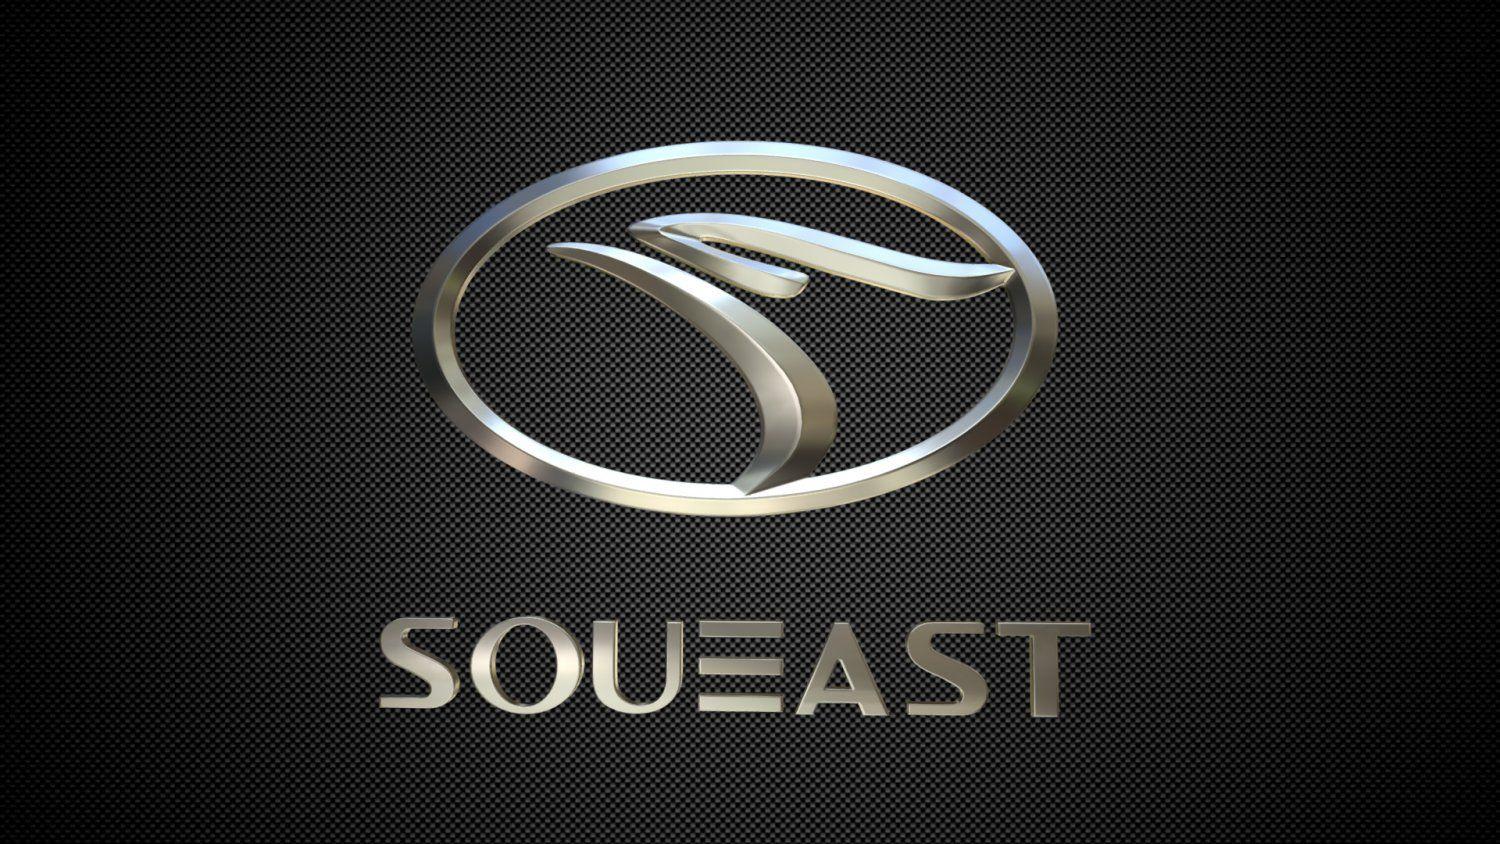 Soueast Logo - Soueast logo 3D Model in Parts of auto 3DExport